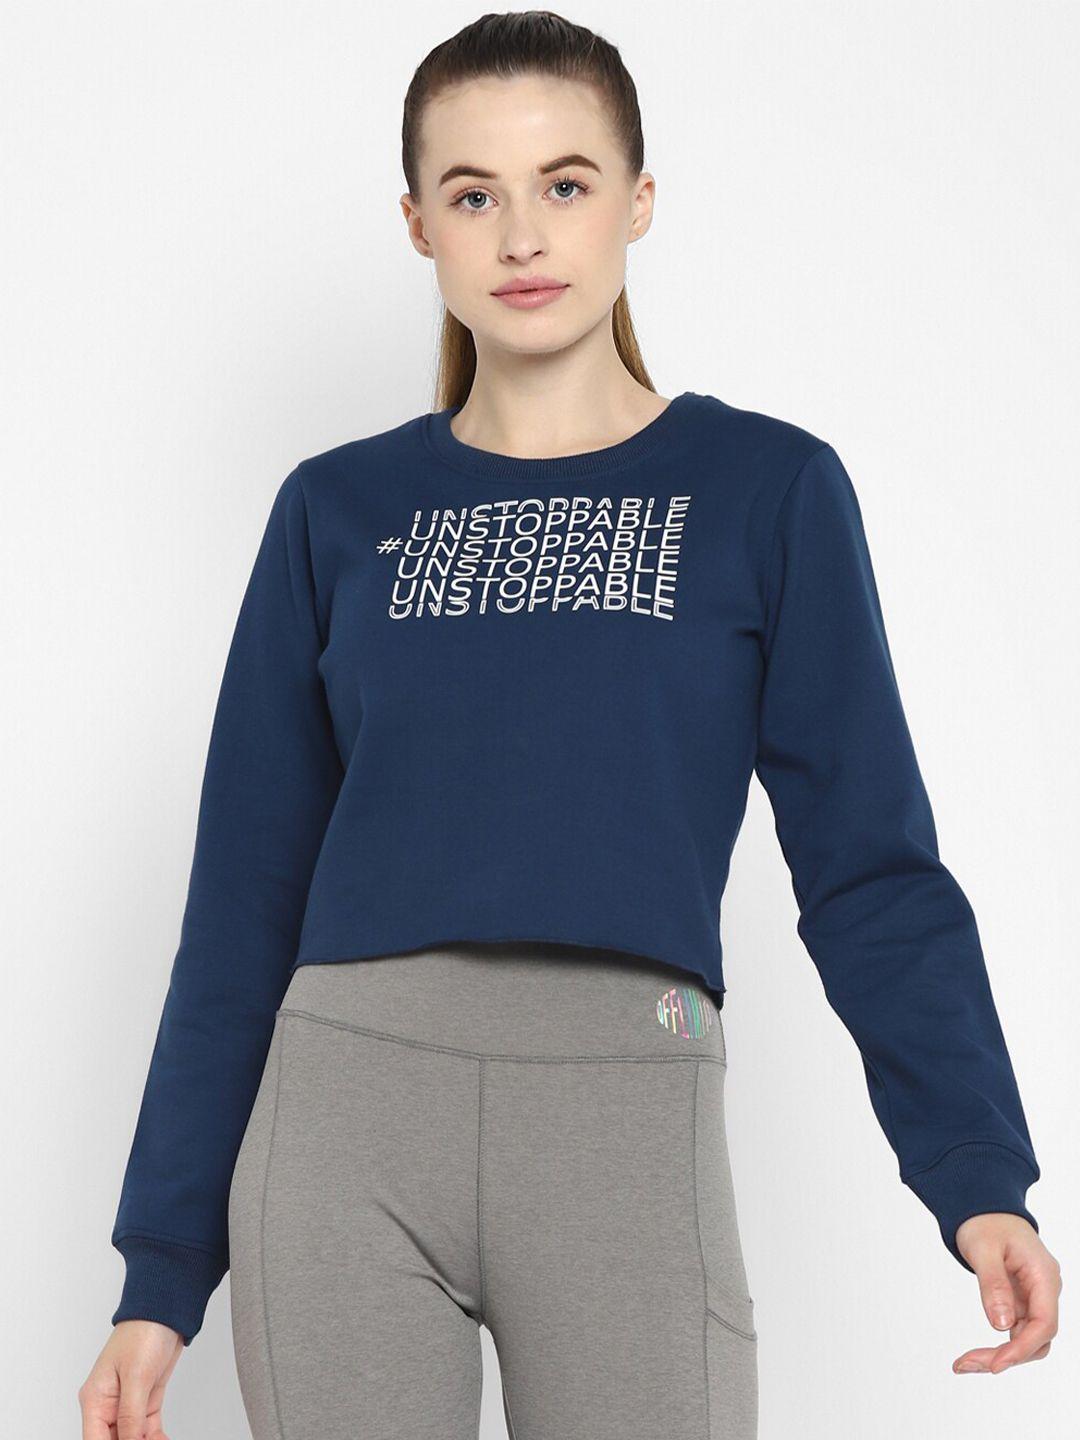 off limits women navy blue printed cotton sweatshirt